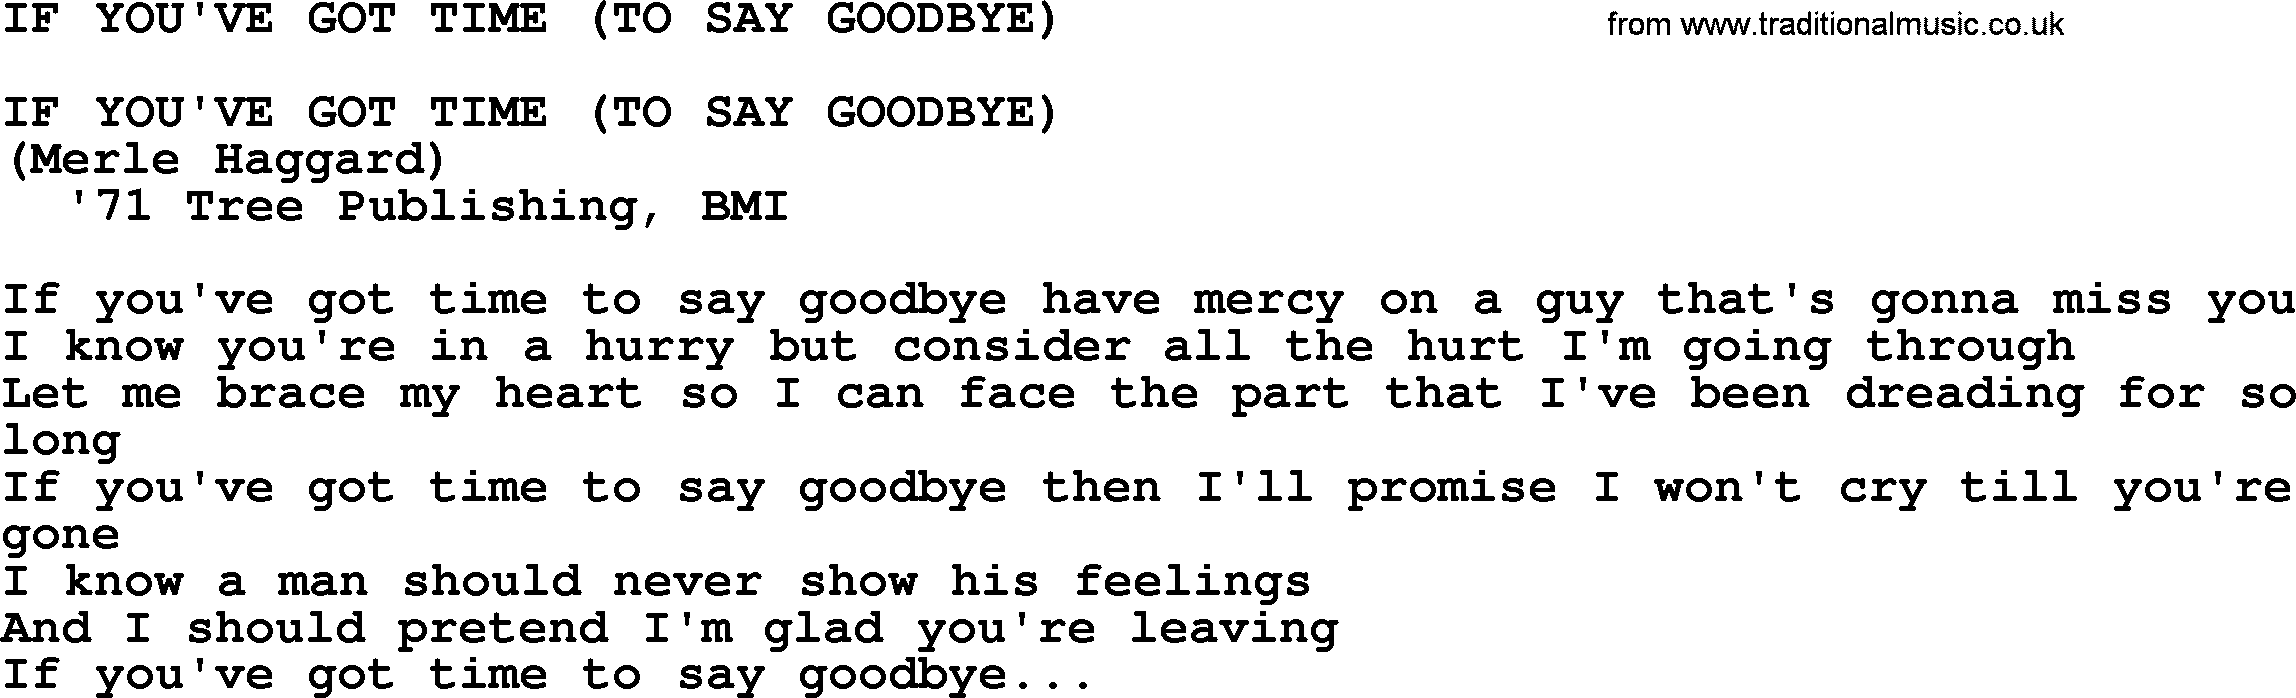 Merle Haggard song: If You've Got Time To Say Goodbye, lyrics.